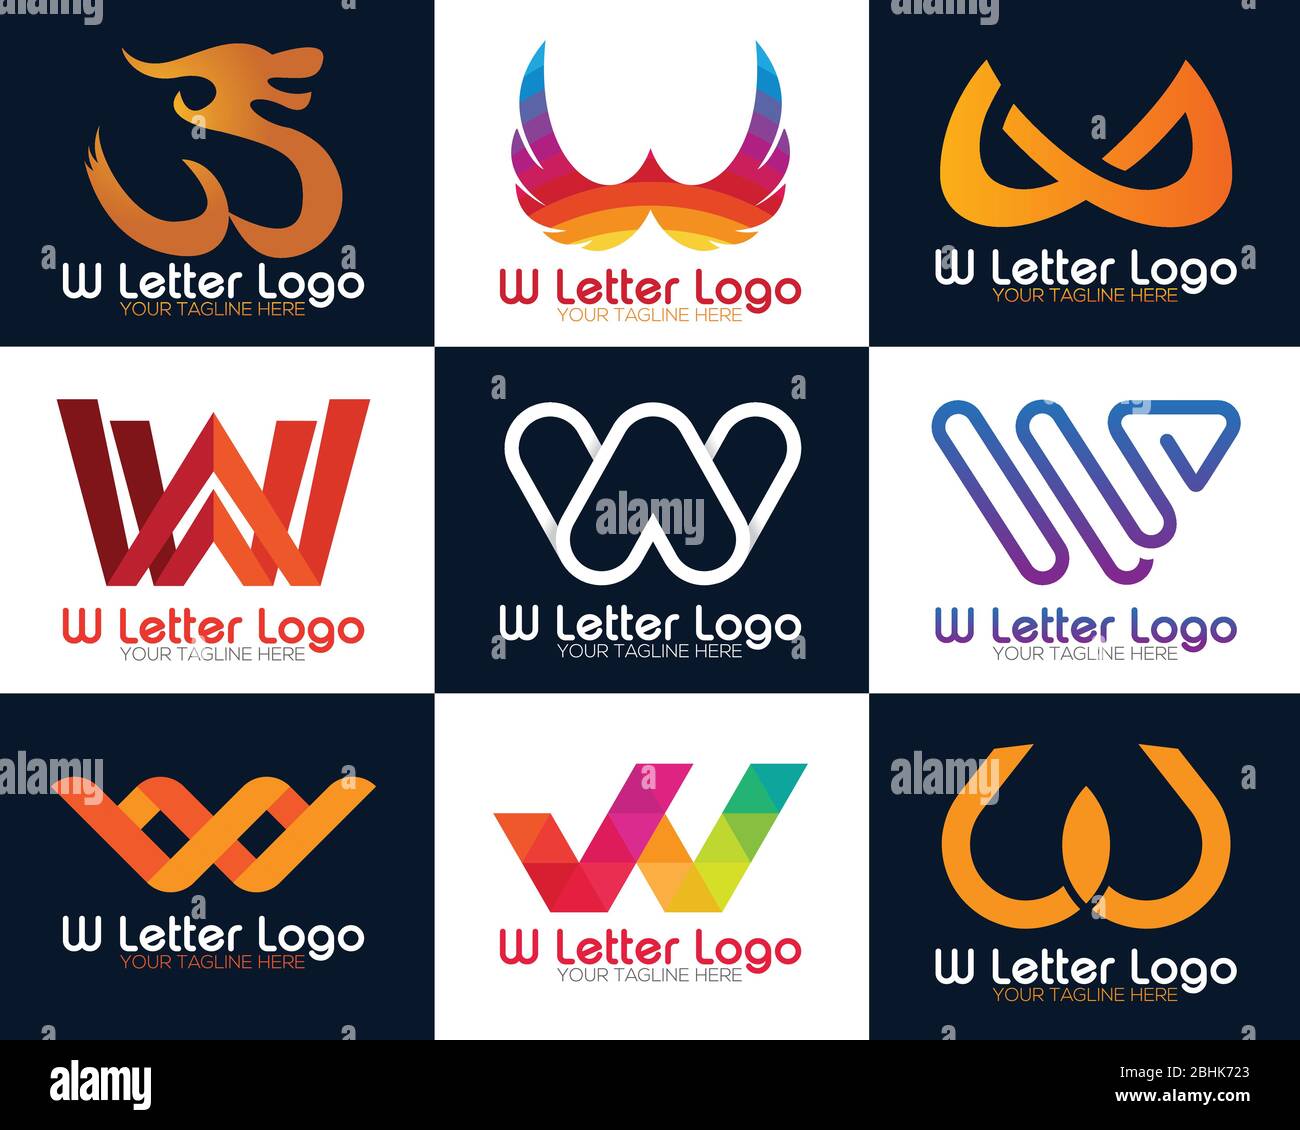 Letter W logo icon design template elements. Stock Vector